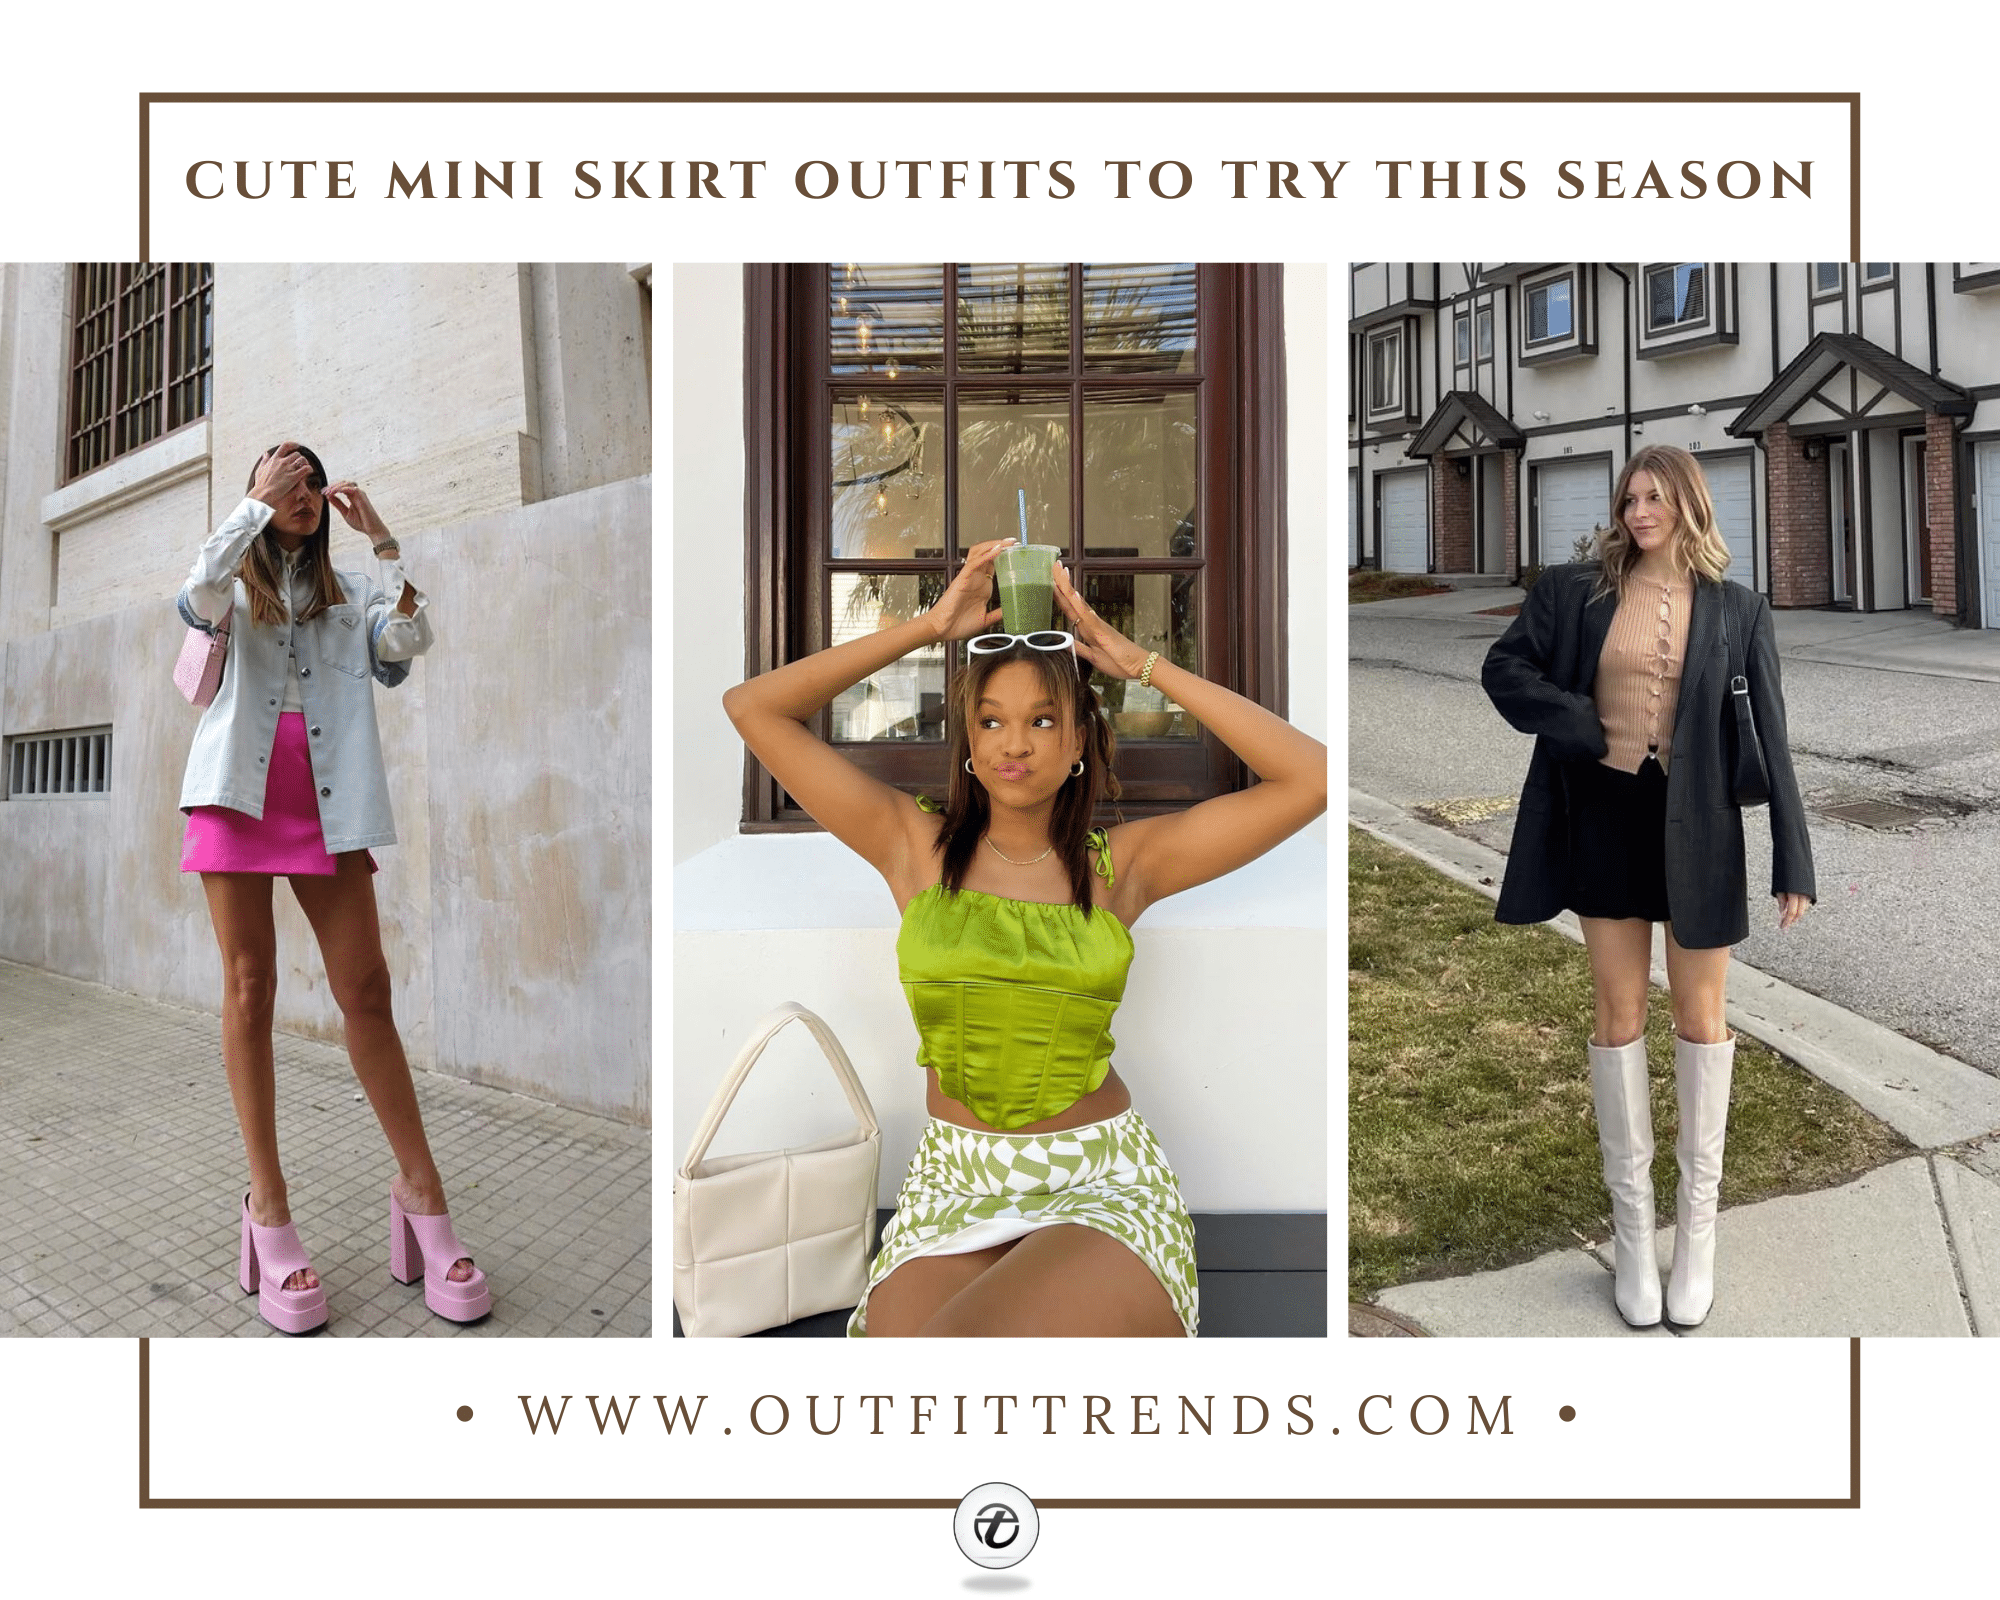 Mini Skirts Outfits - 20 Cute Ways to Wear Mini Skirts